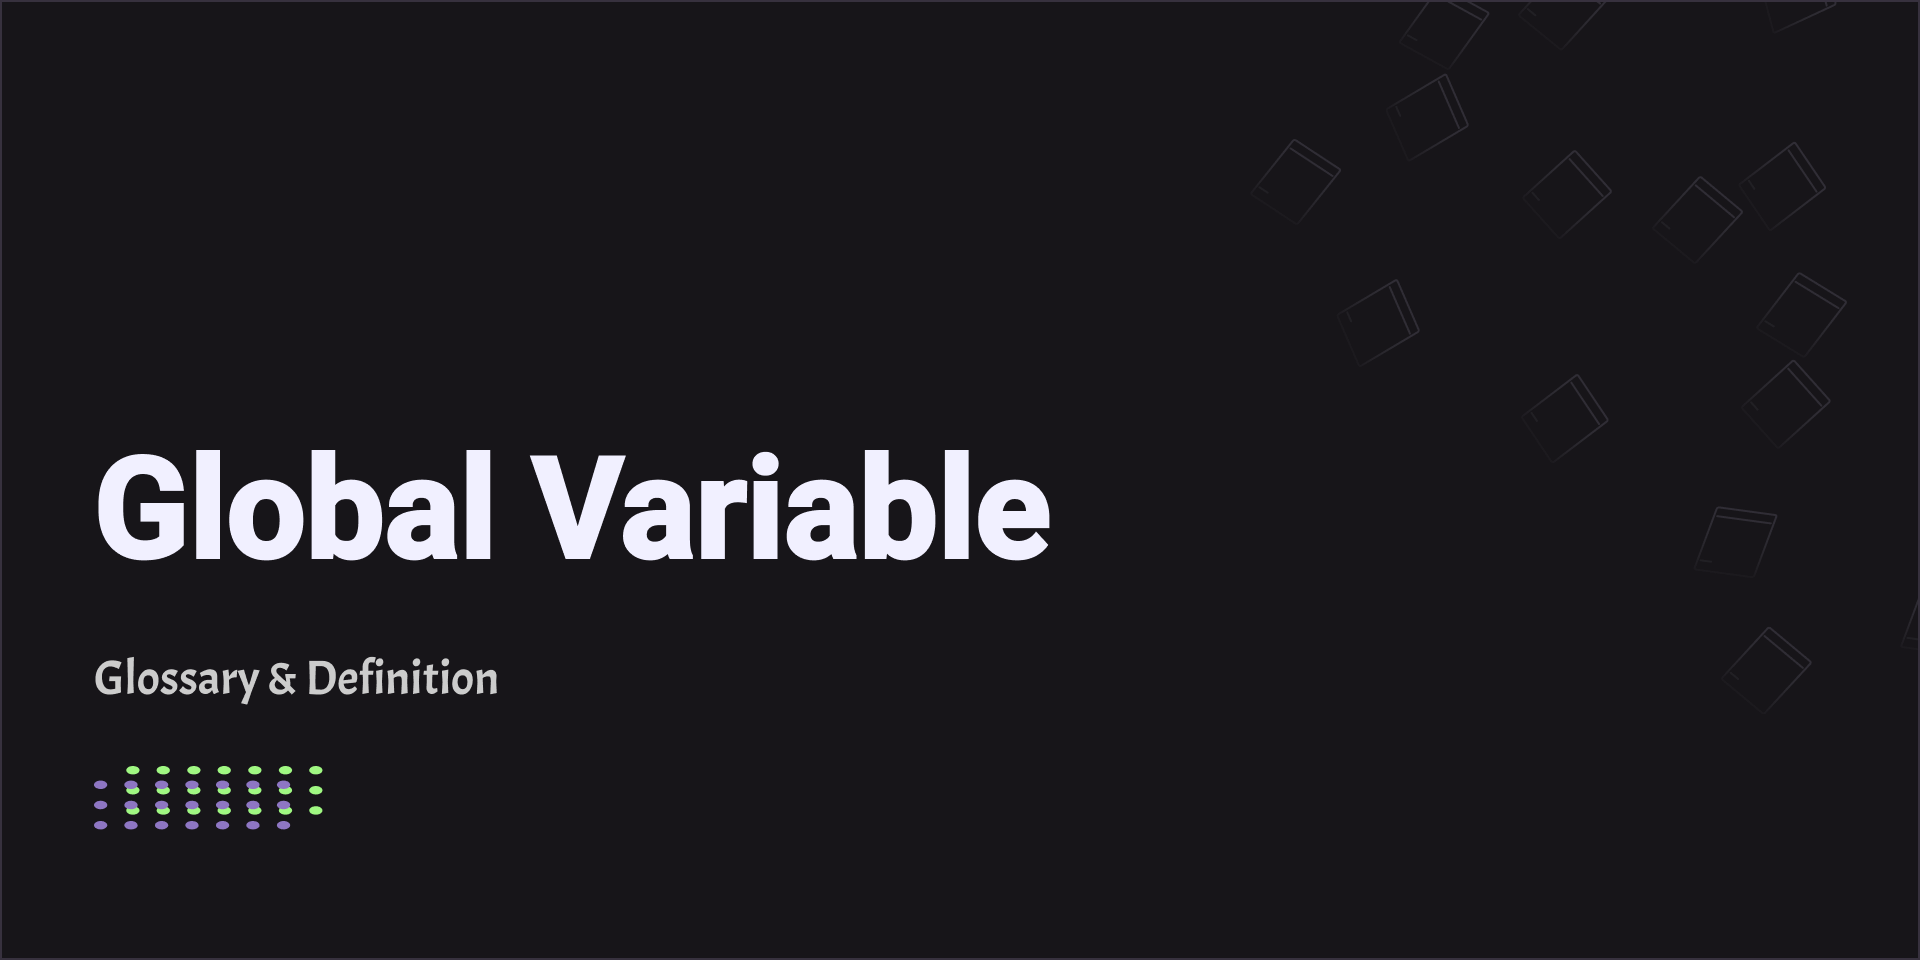 Global Variable